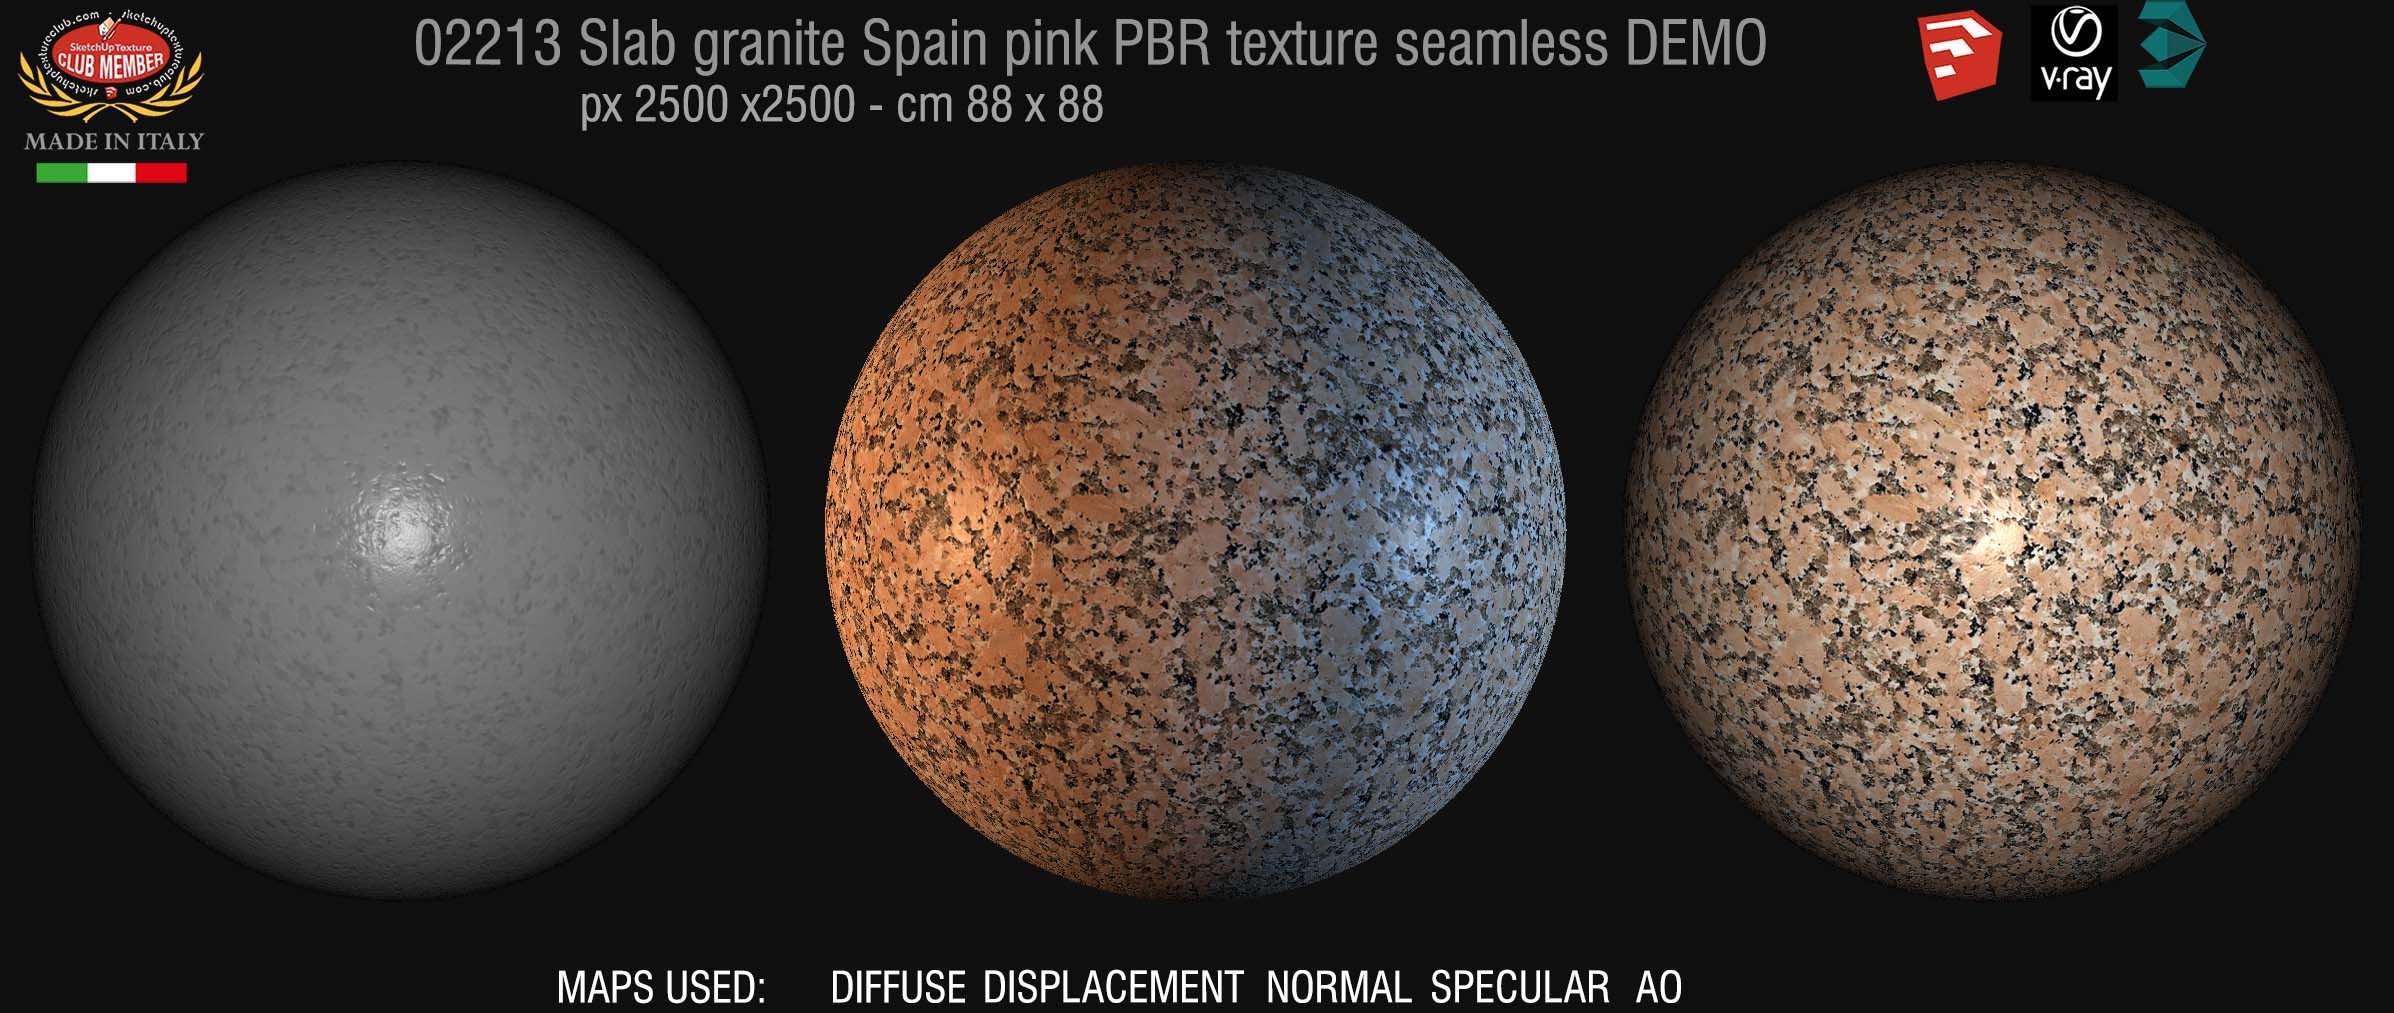 02213 slab granite Spain pink PBR texture seamless DEMO